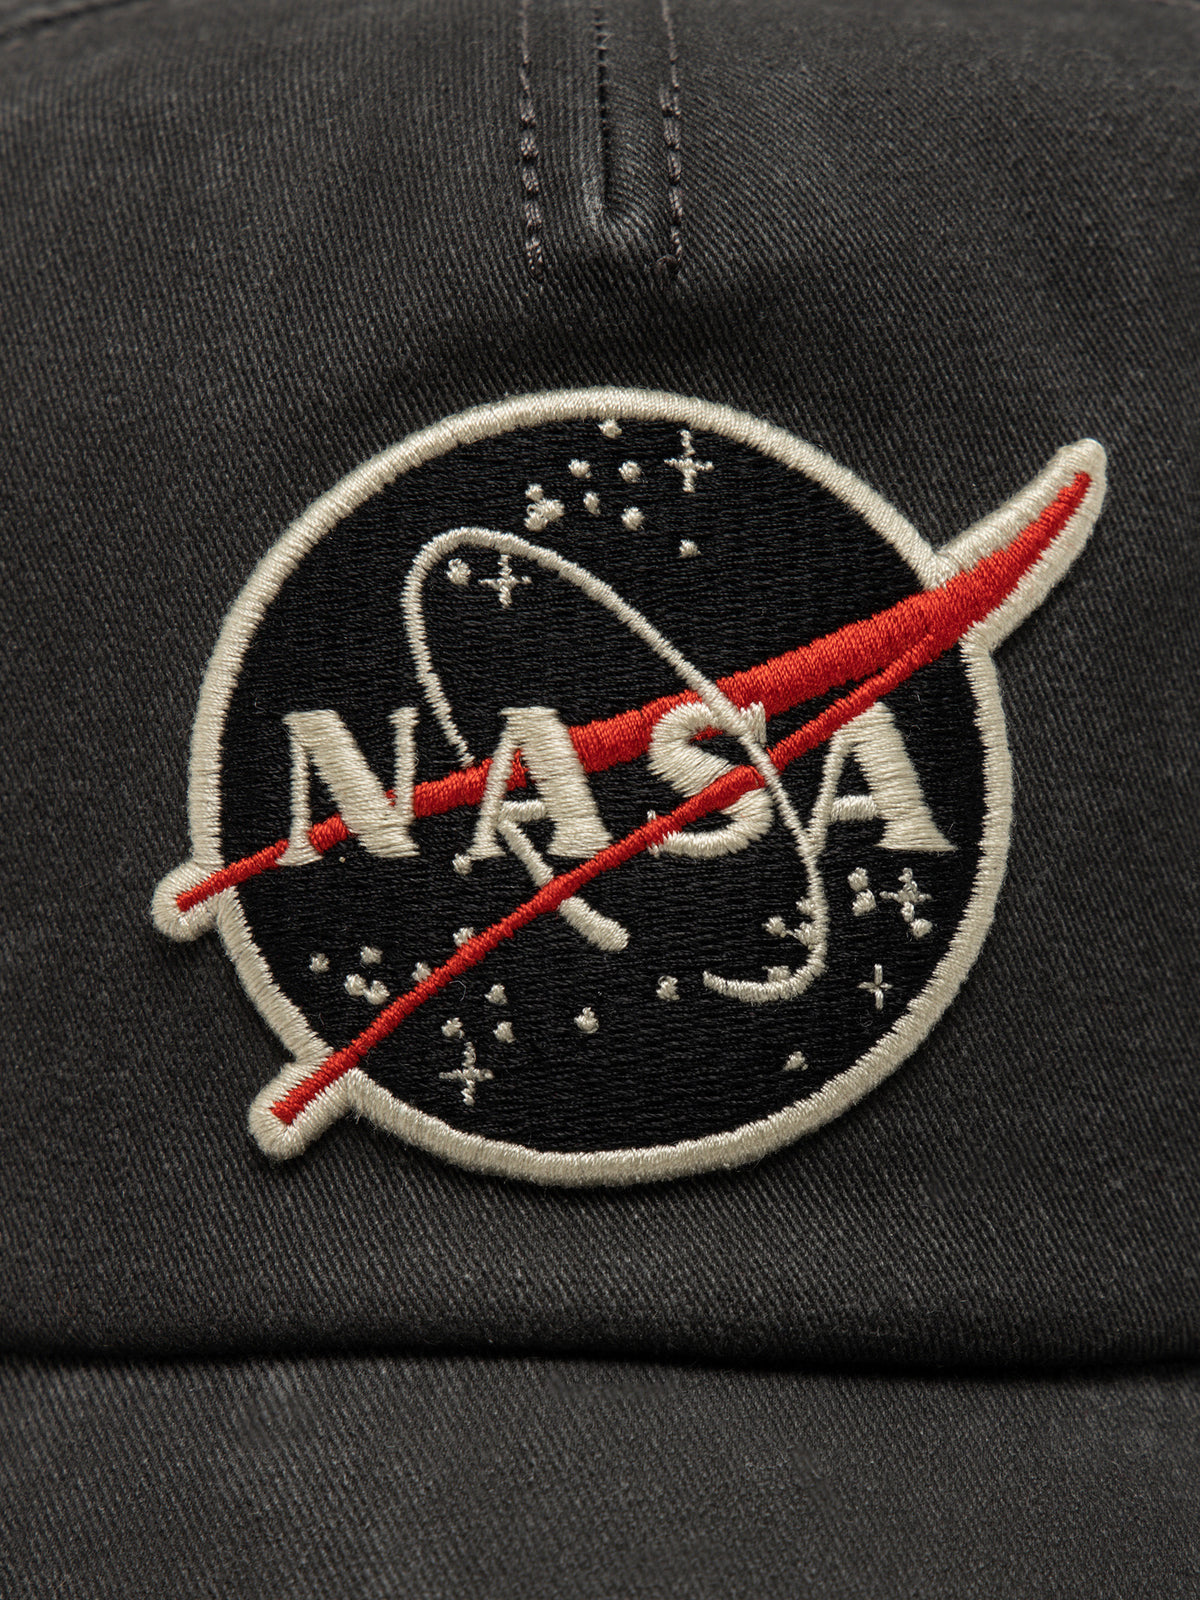 NASA Space Surplus Cap in Black